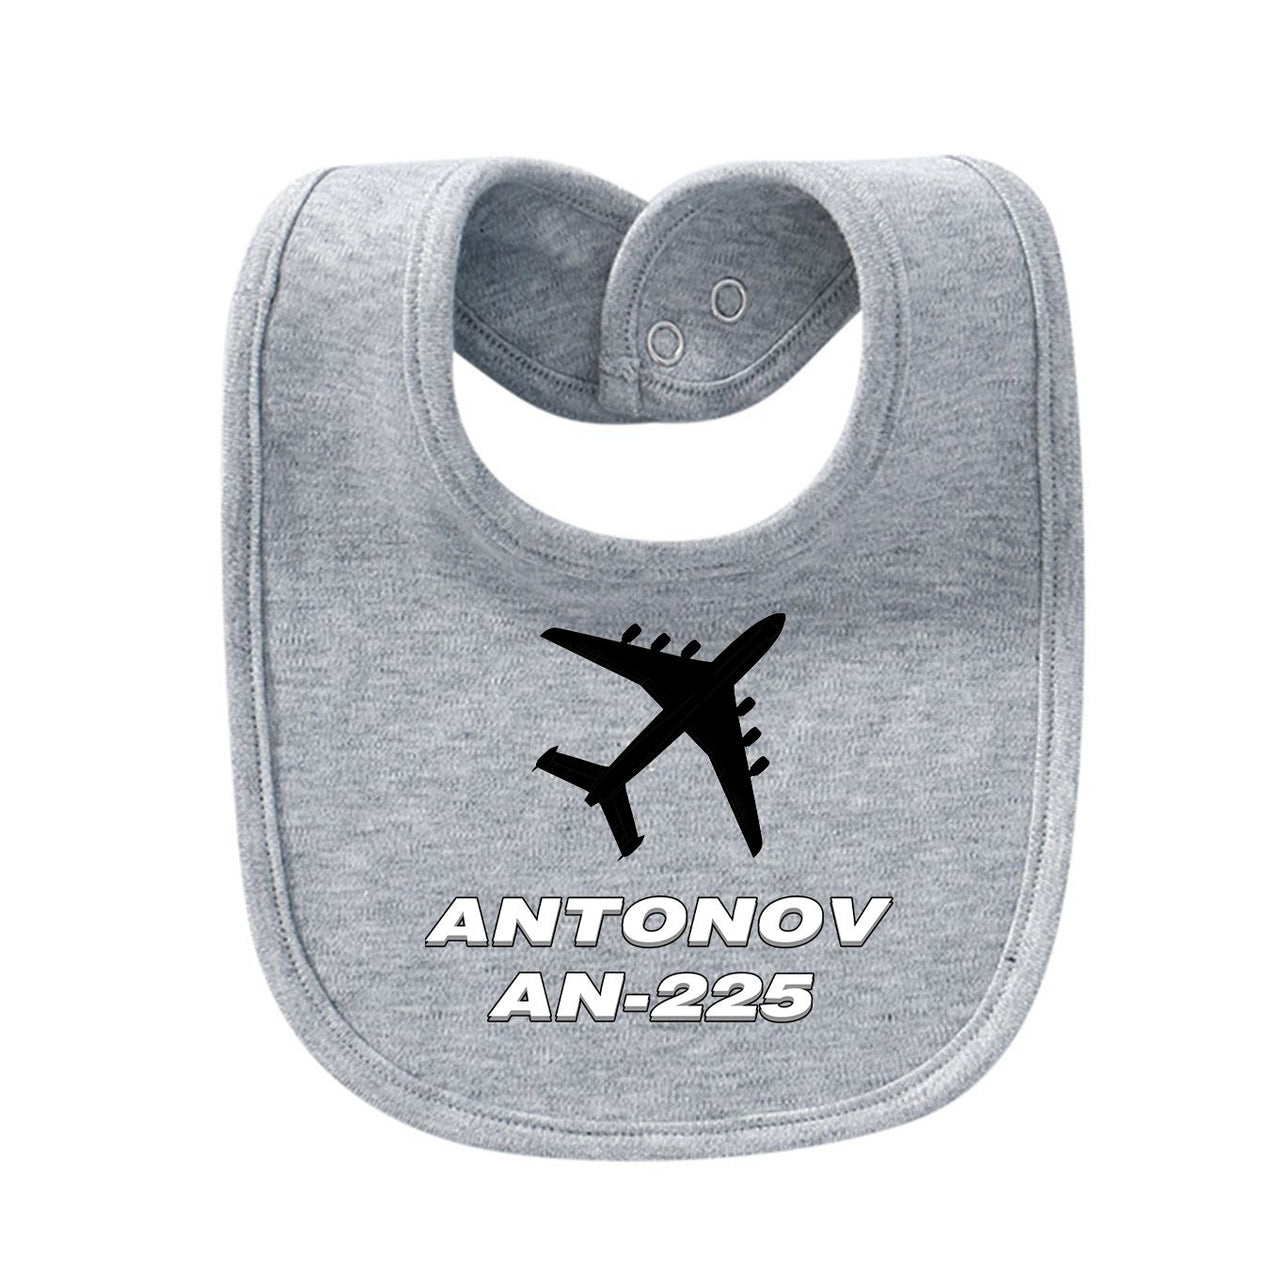 Antonov AN-225 (28) Designed Baby Saliva & Feeding Towels